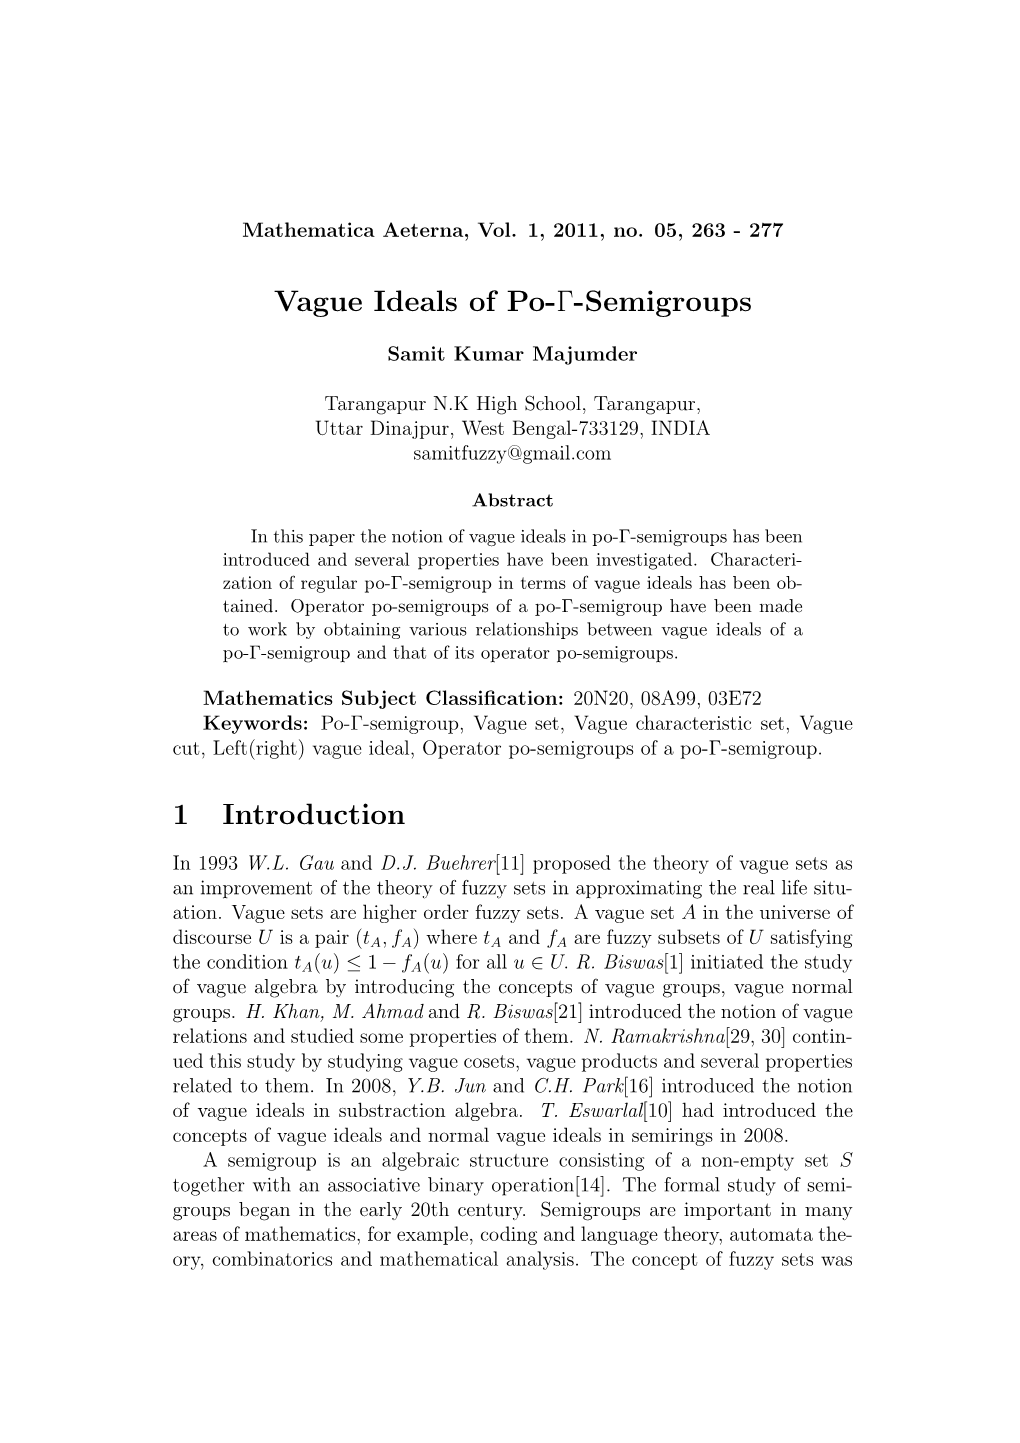 Vague Ideals of Po-Γ-Semigroups 1 Introduction